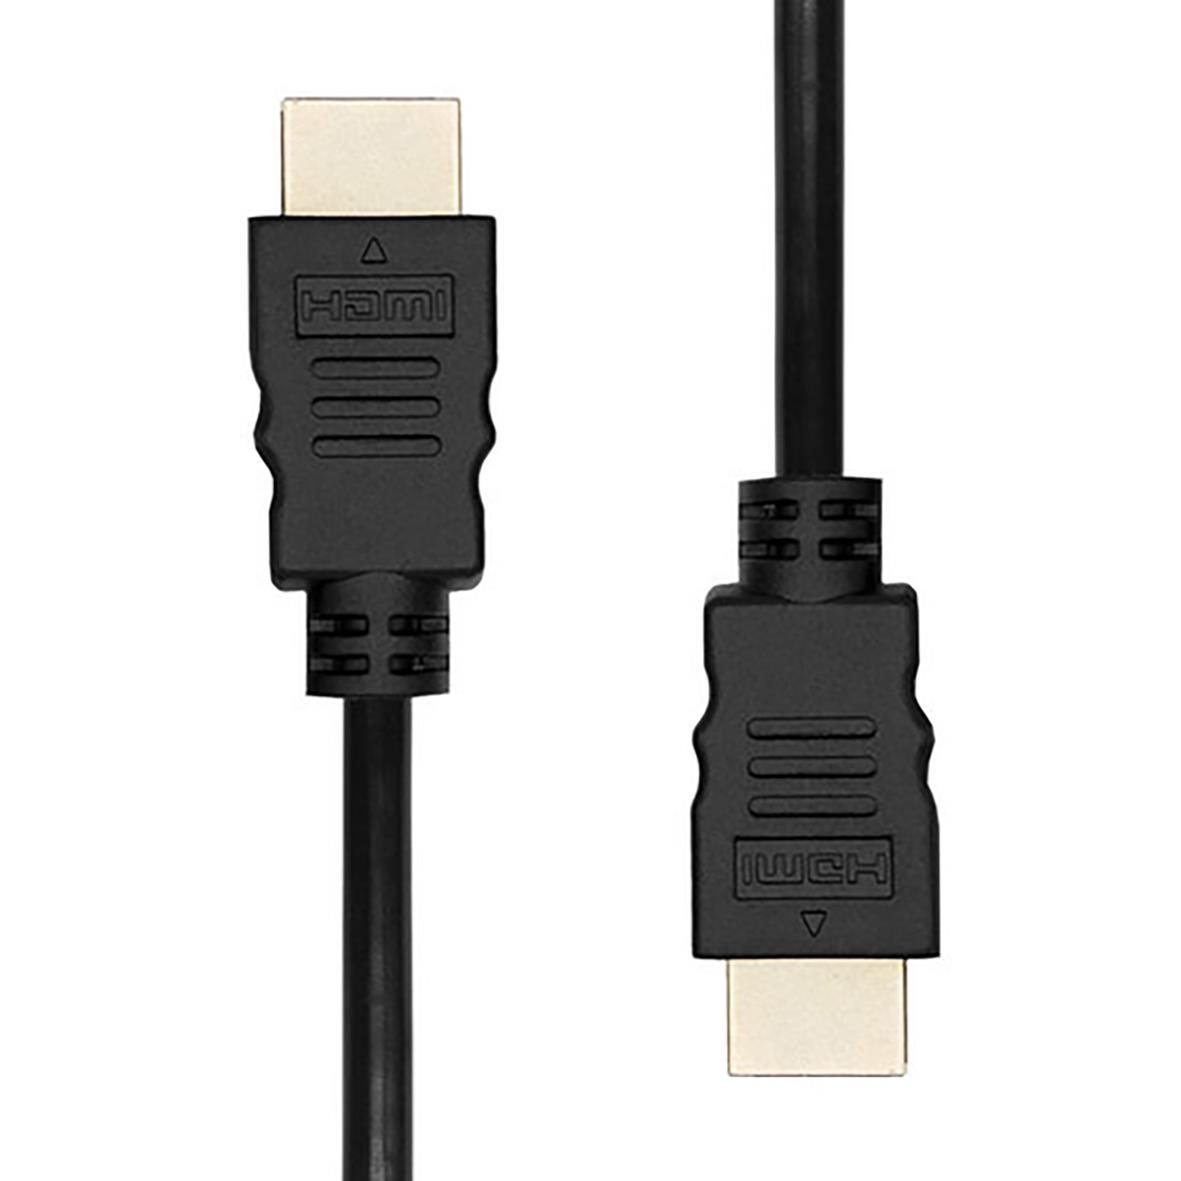 HDMI-kabel, 19-pin ha - ha 1,4 1m 4k i 30Hz